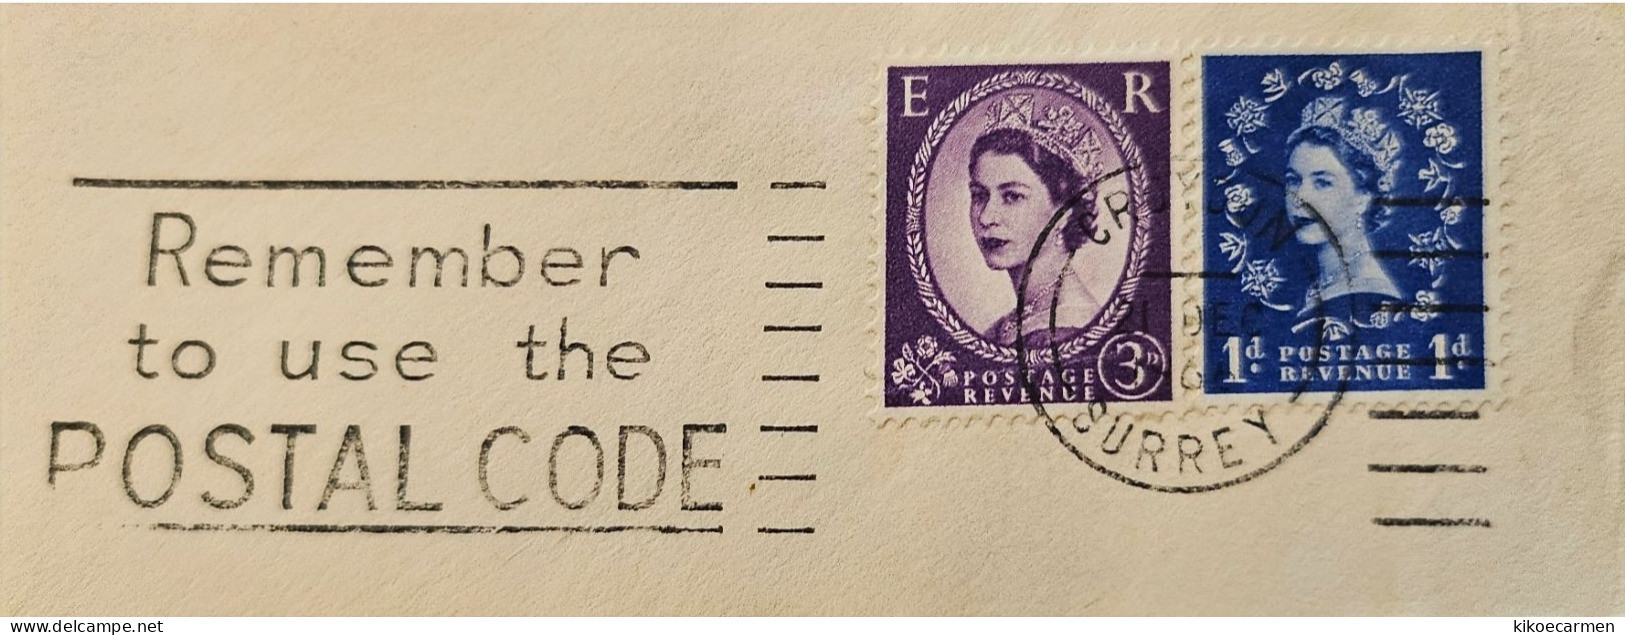 ZIP CODE Postal Code History Of Post Cancel Cancellation Postmark - Postleitzahl